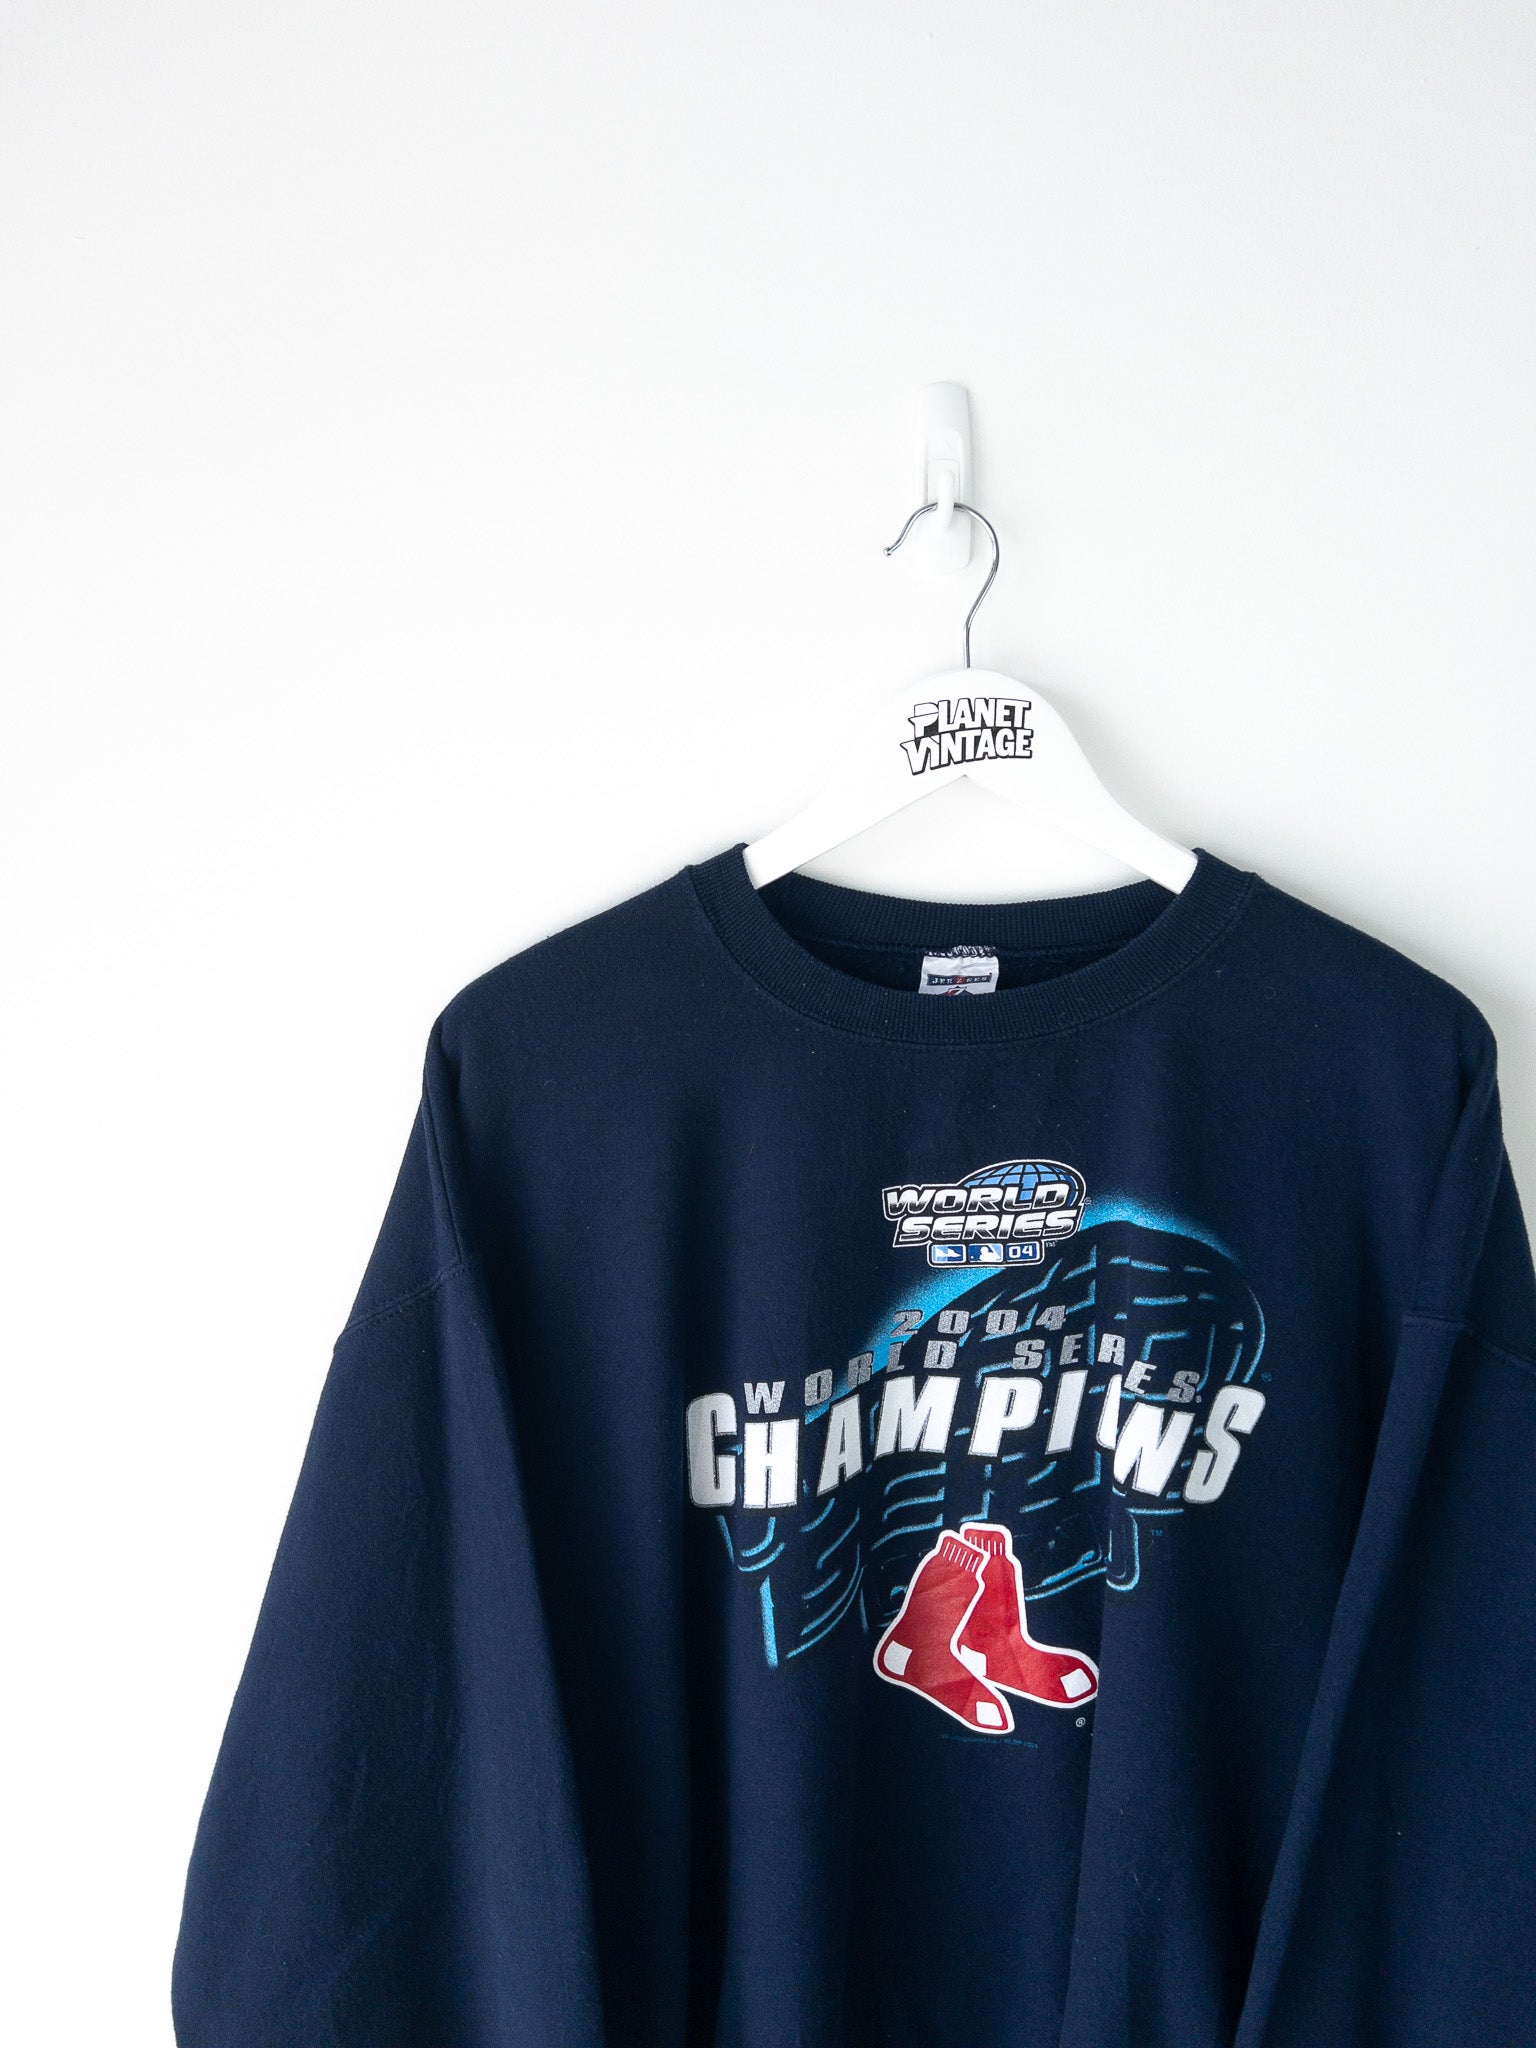 Vintage Red Sox Champions 2004 Sweatshirt (L)